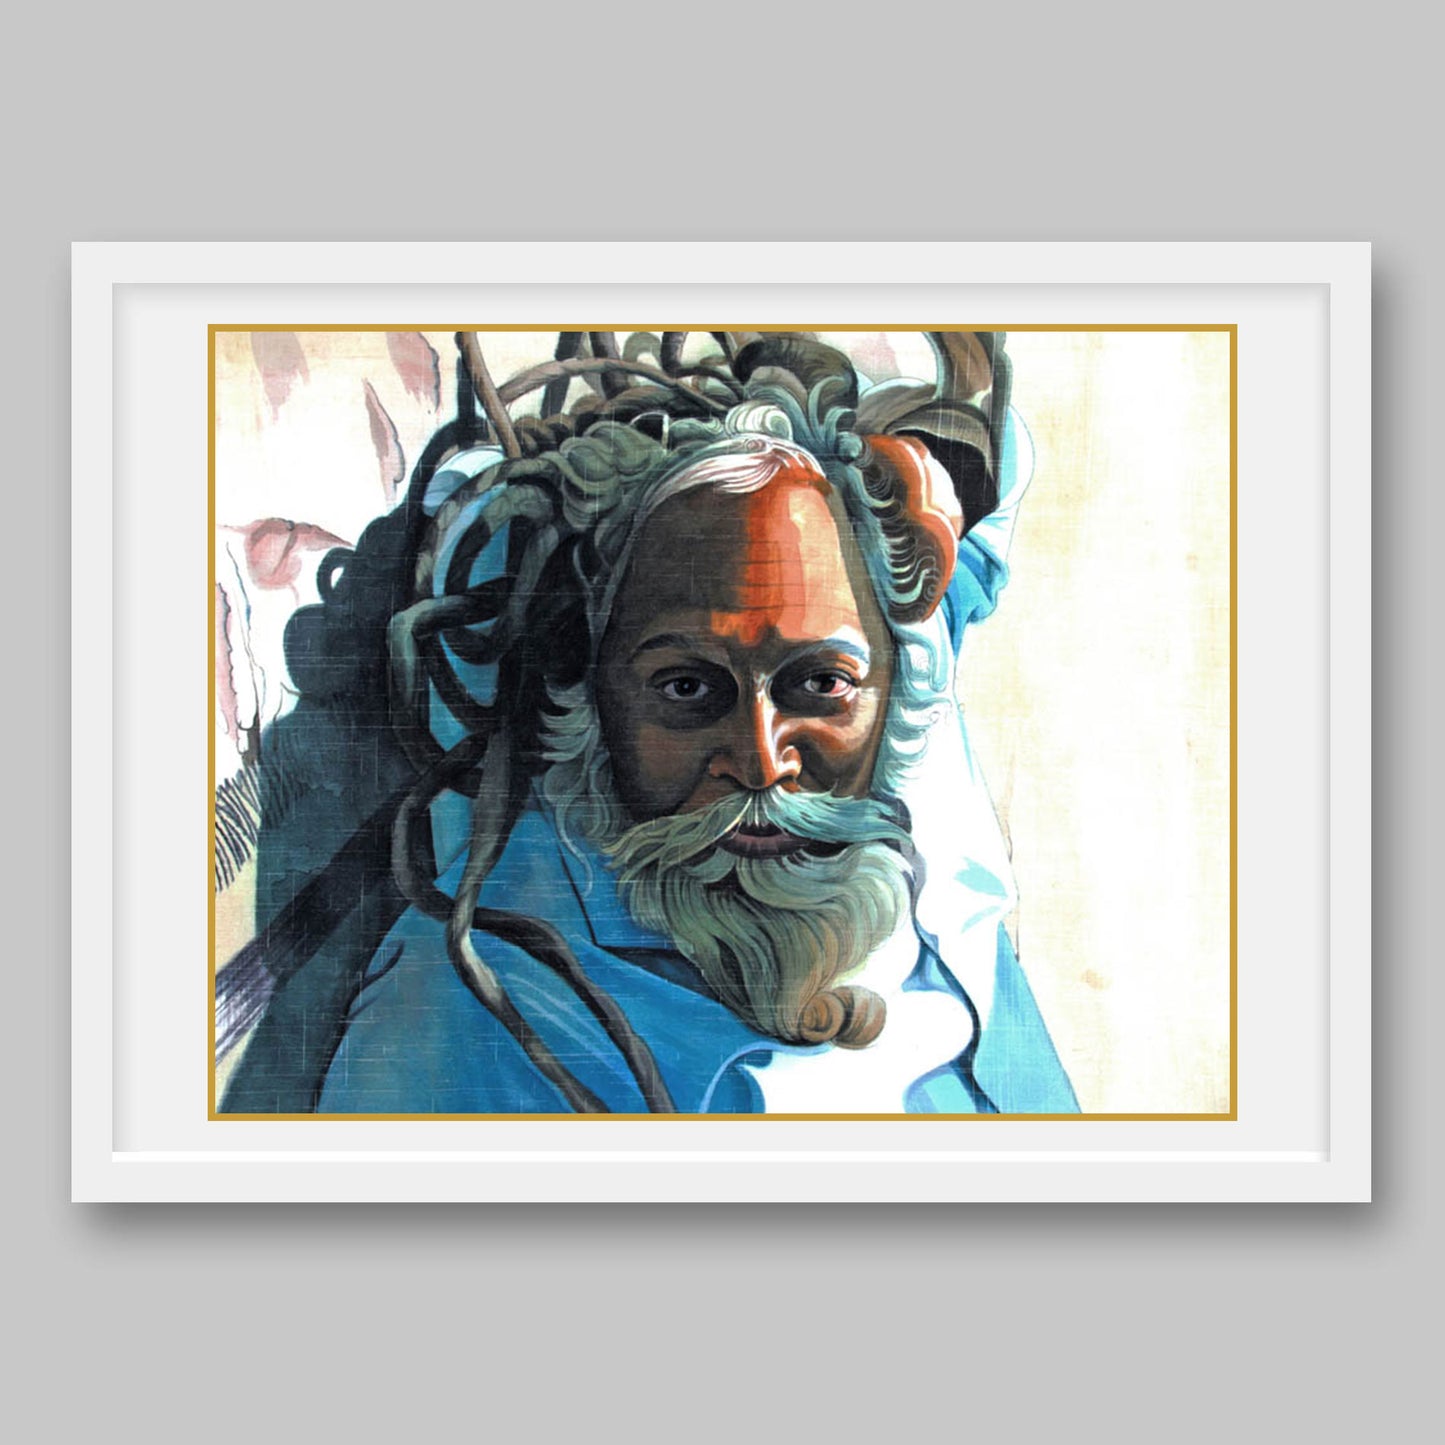 Sadhu with Dreadlocks - High Quality Print of Artwork by Pieter Weltevrede